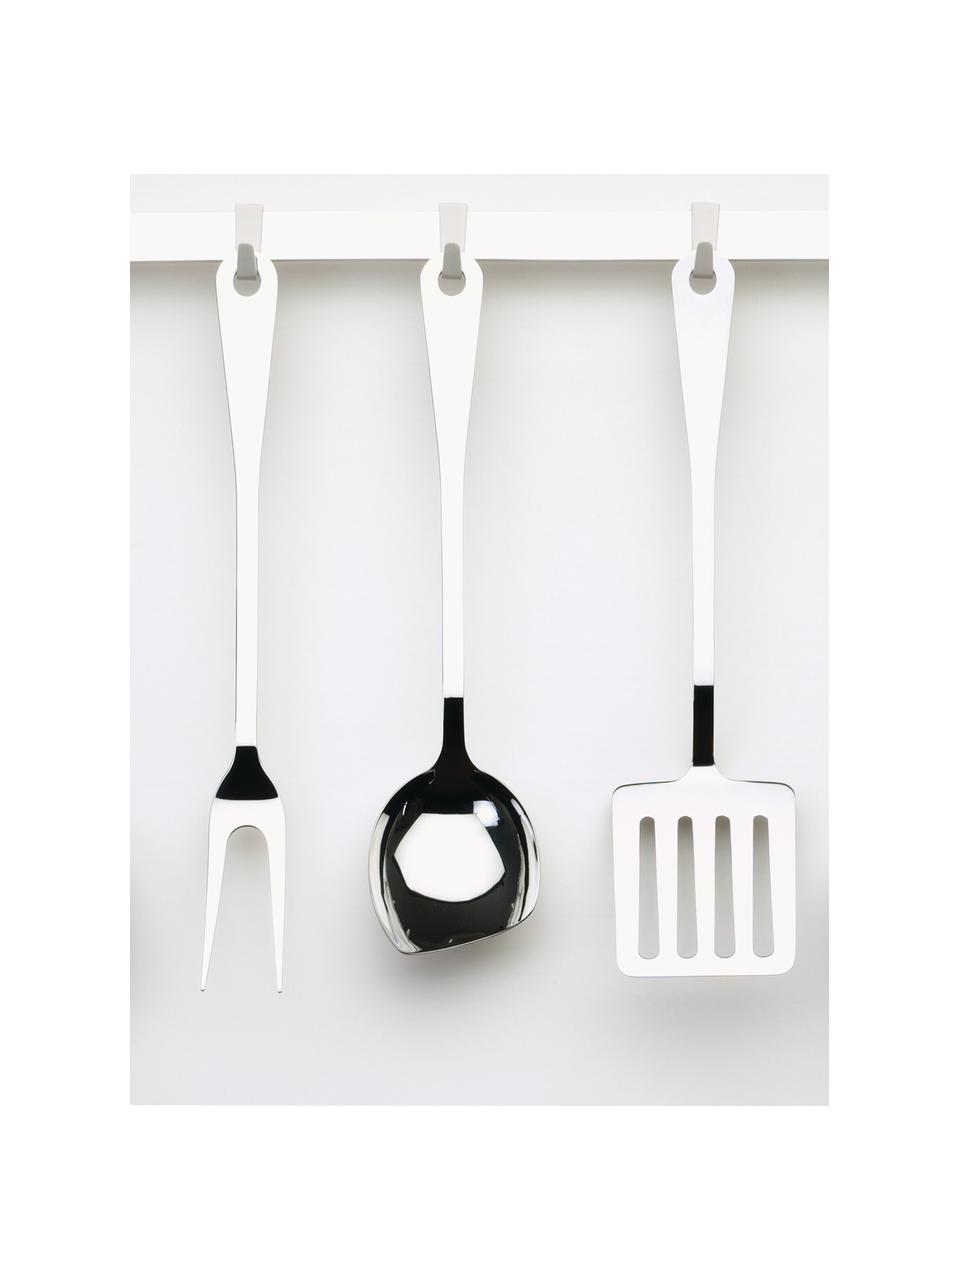 Set 5 utensili da cucina in acciaio inossidabile Kitchen, Acciaio inossidabile 18/10, lucidato a specchio, Argentato, Lunghezza 33 cm